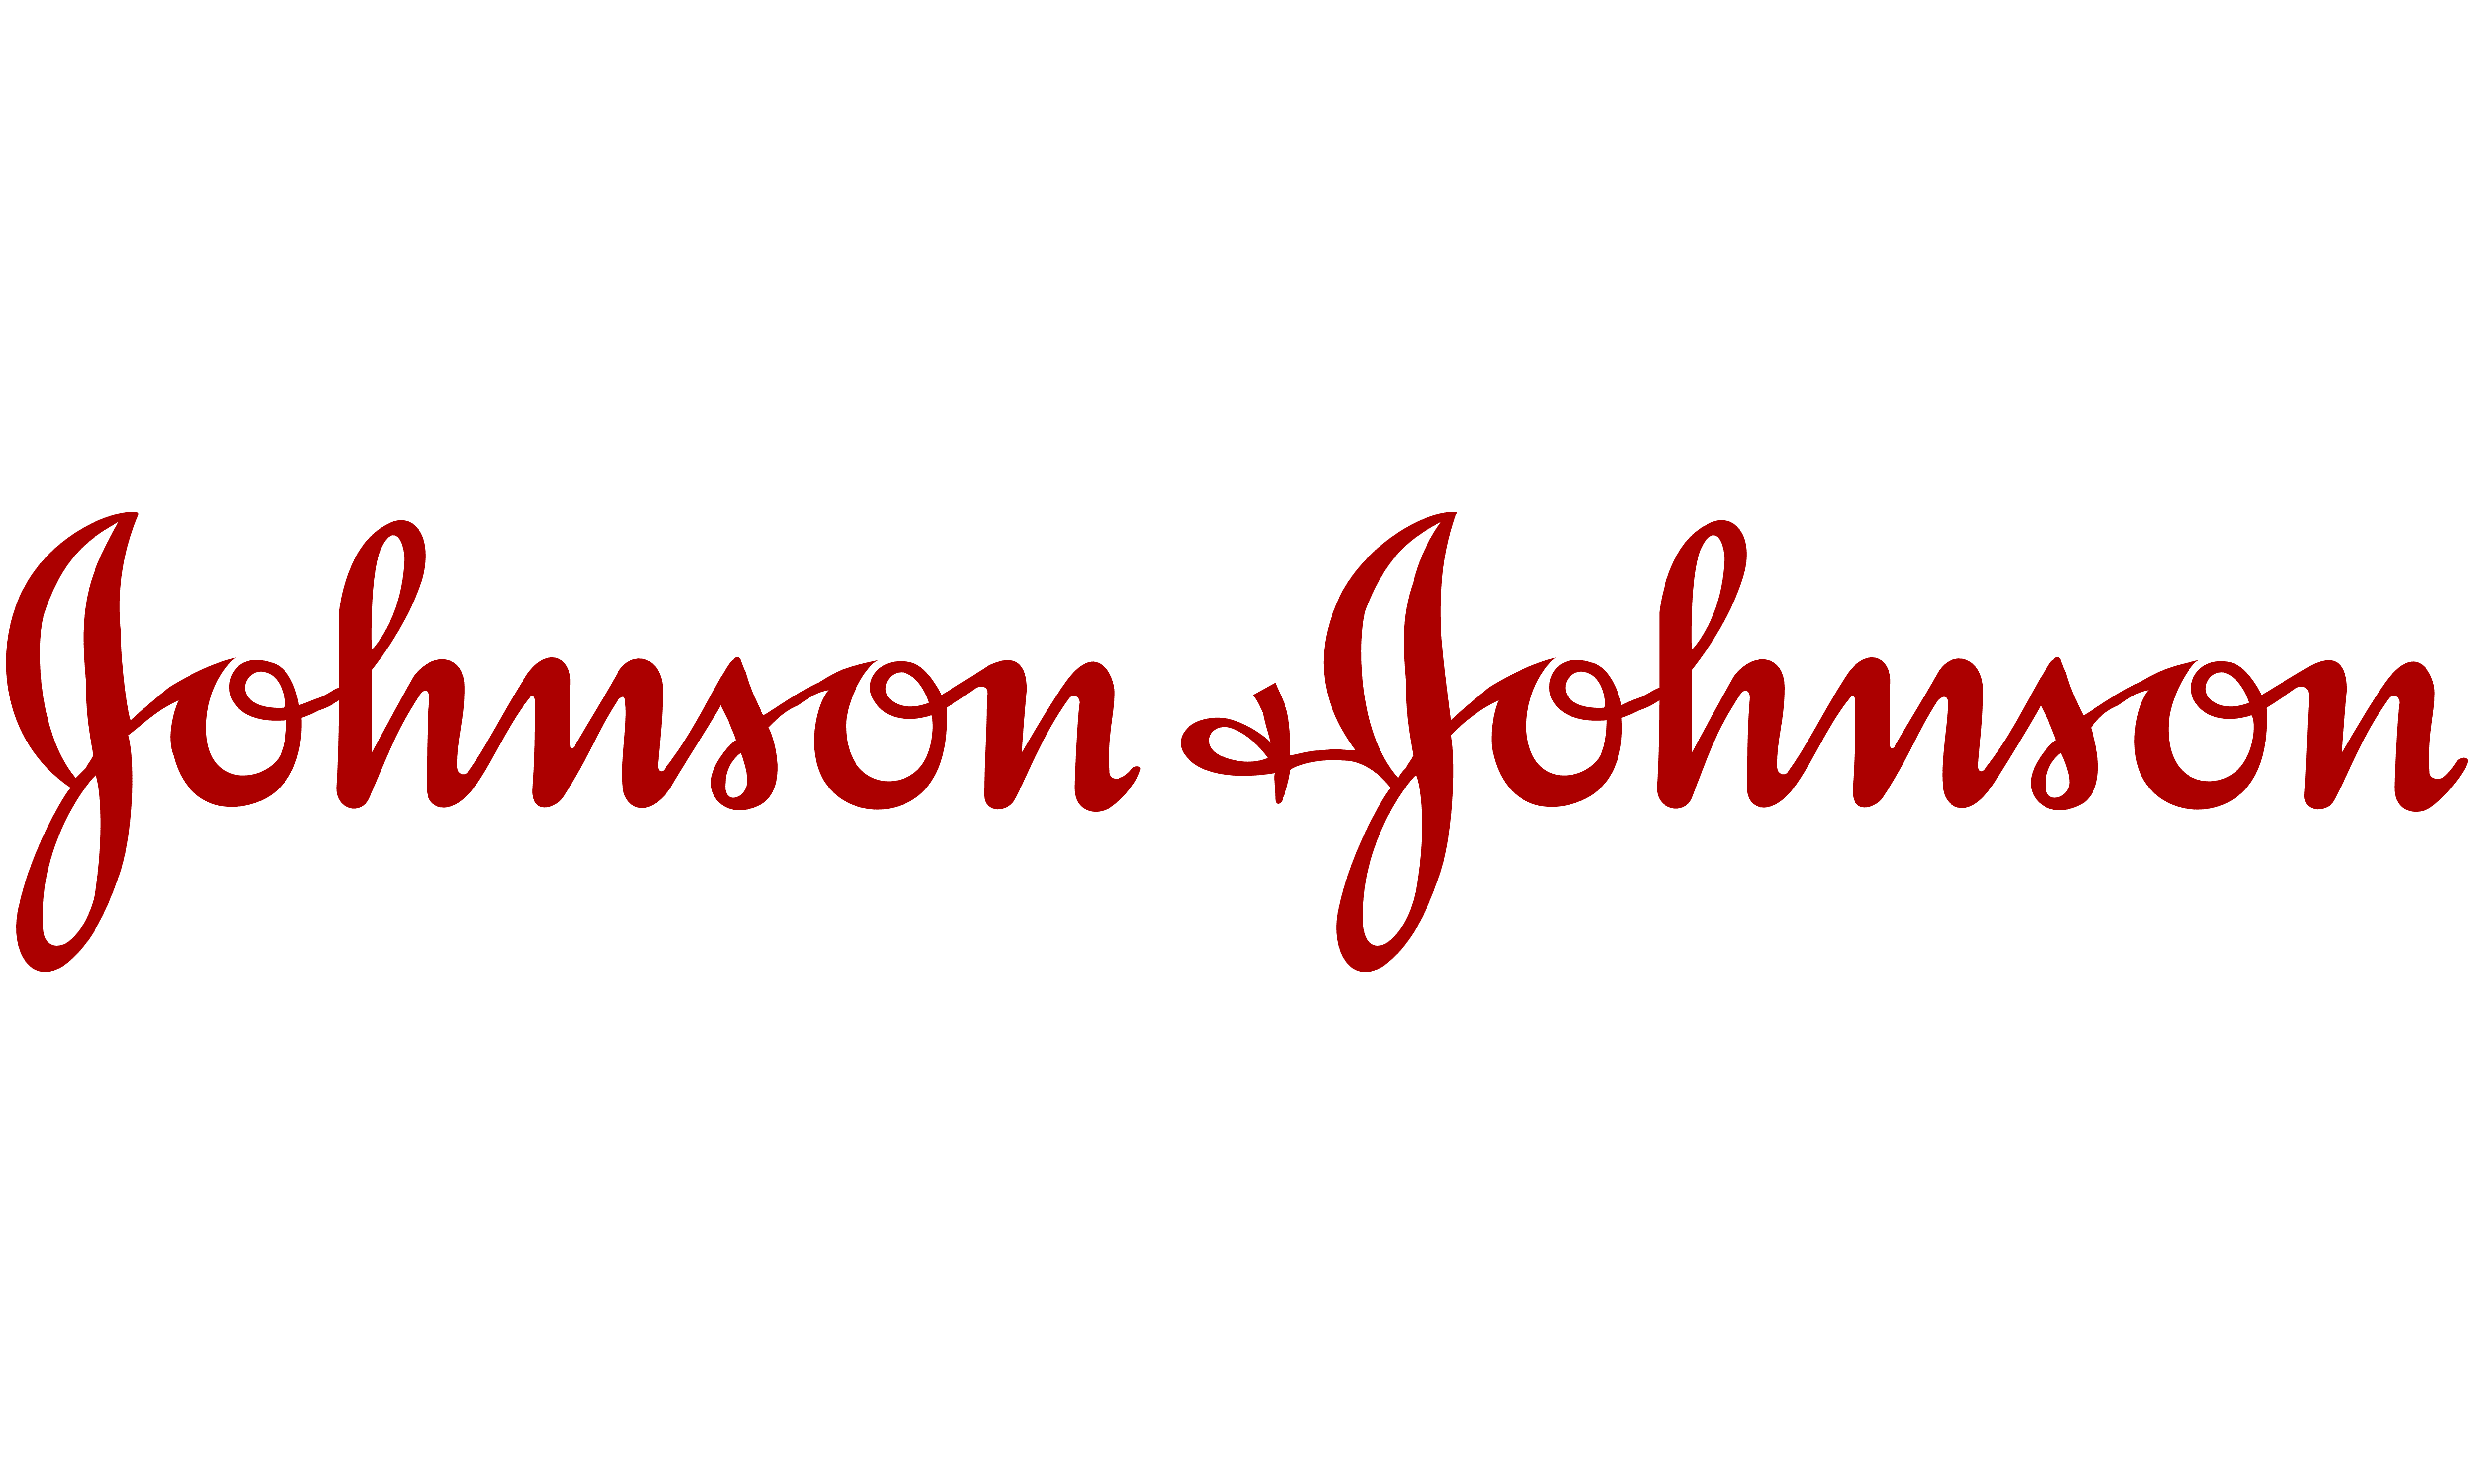 Johnson-and-Johnson -best event management company maharashtra